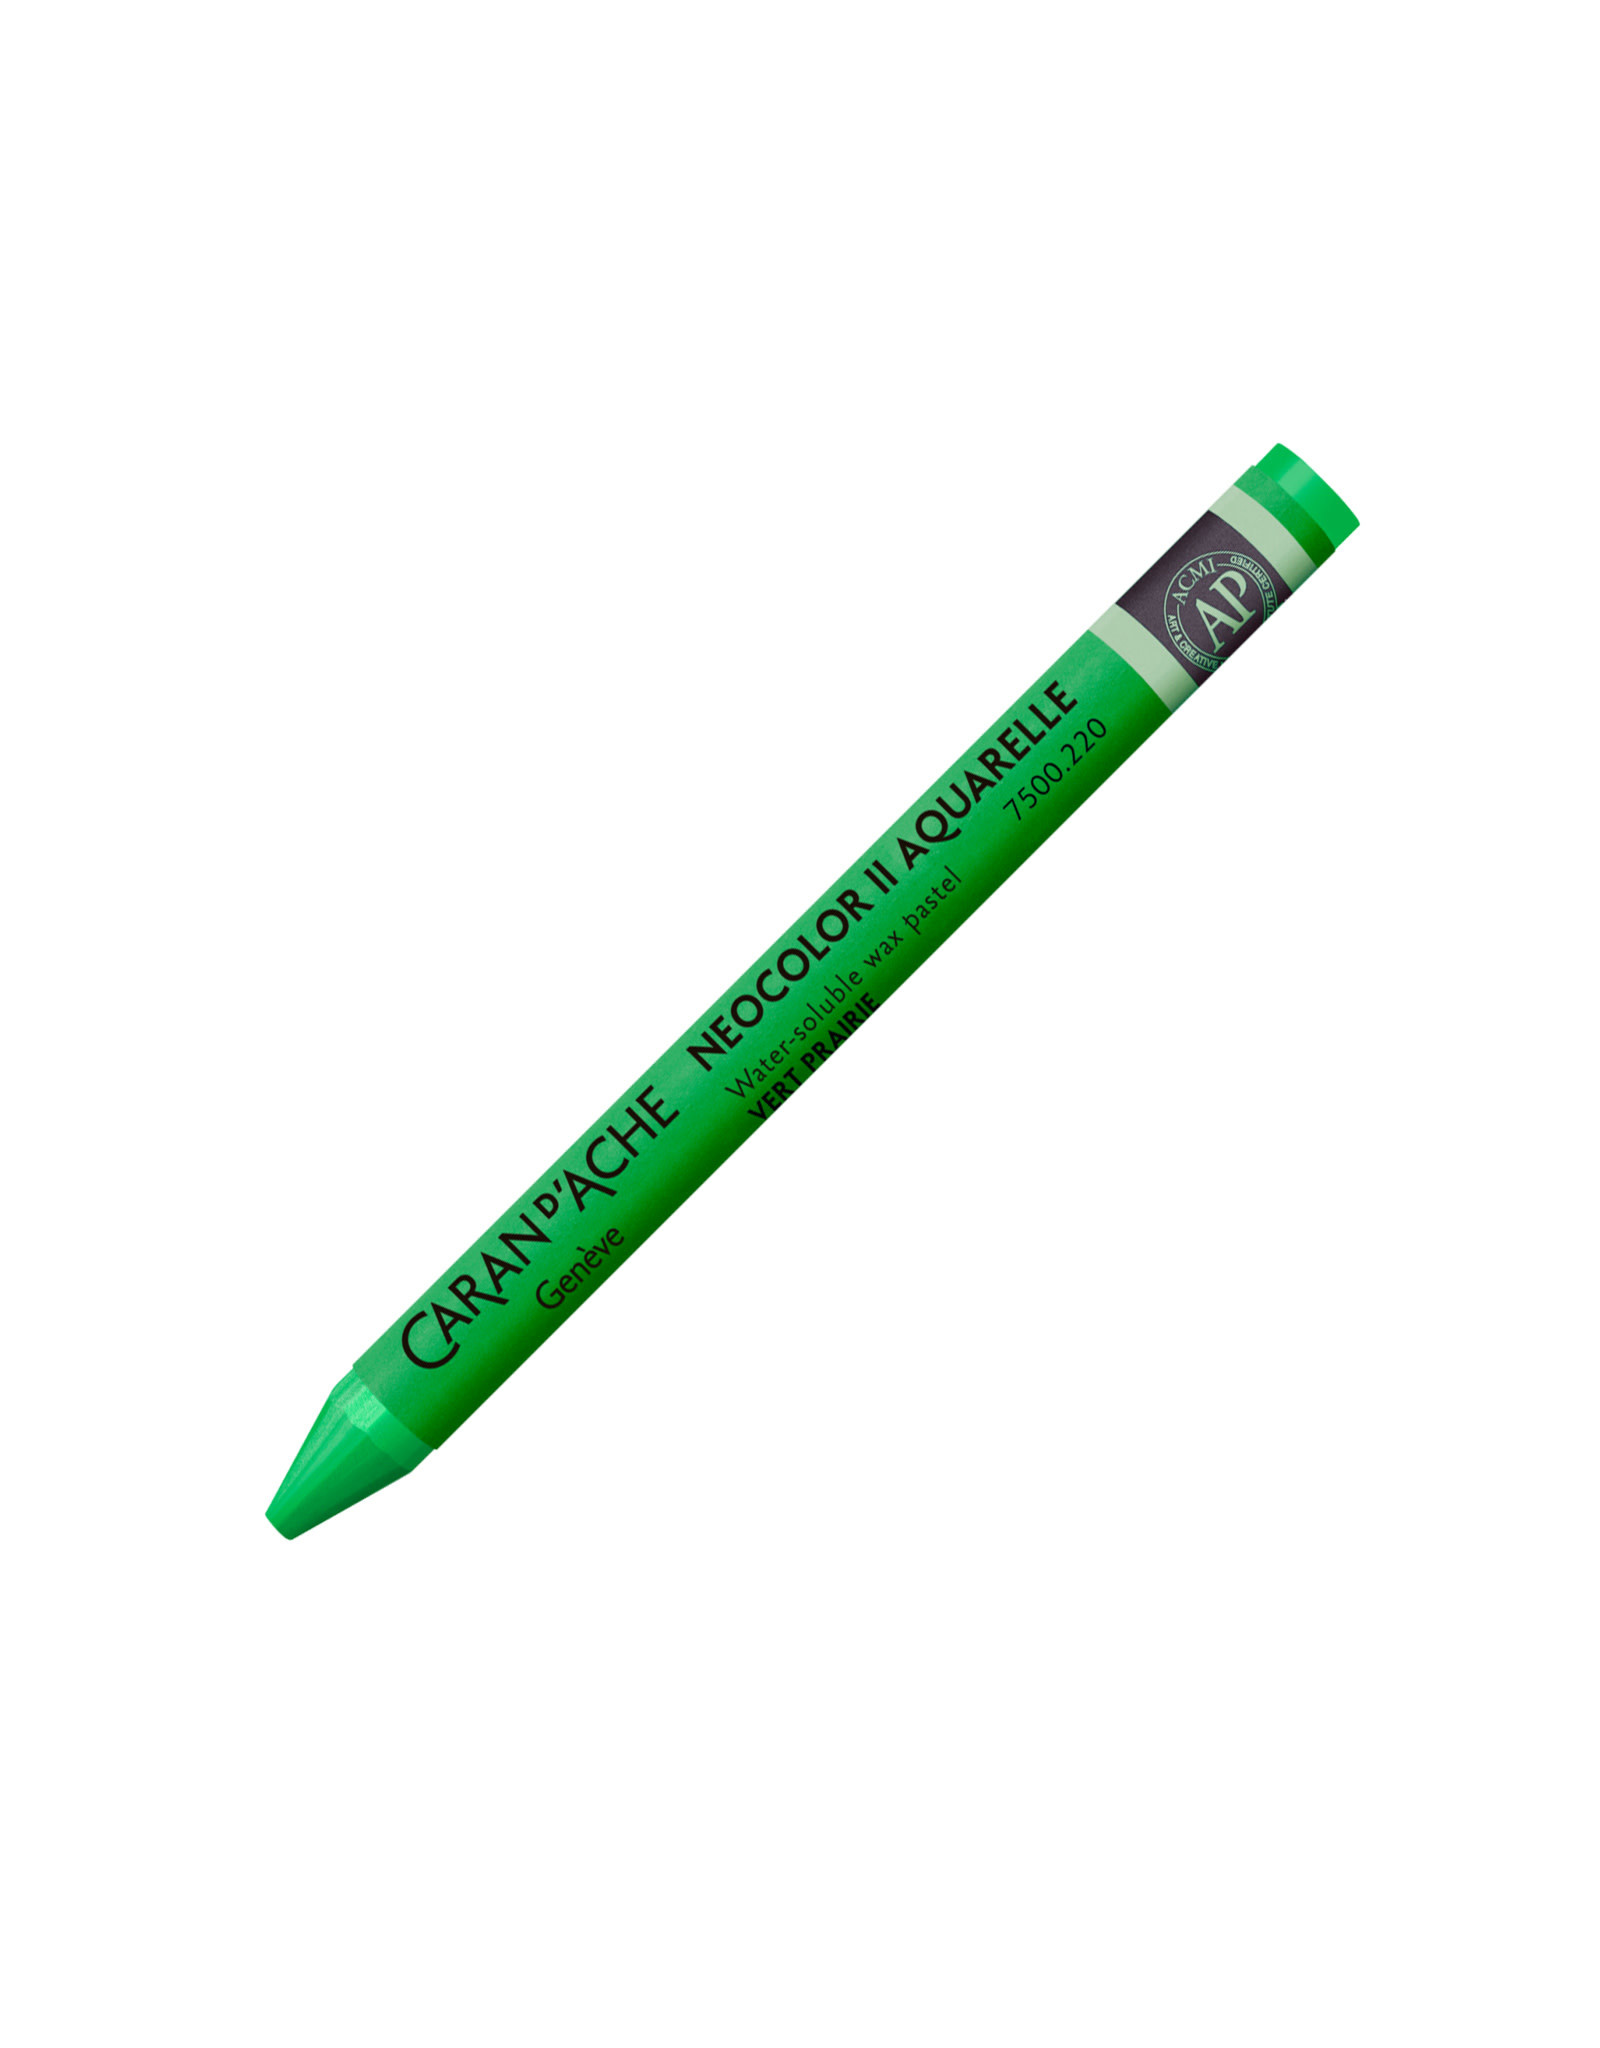 Caran d'Ache Neocolor II Crayons Grass Green